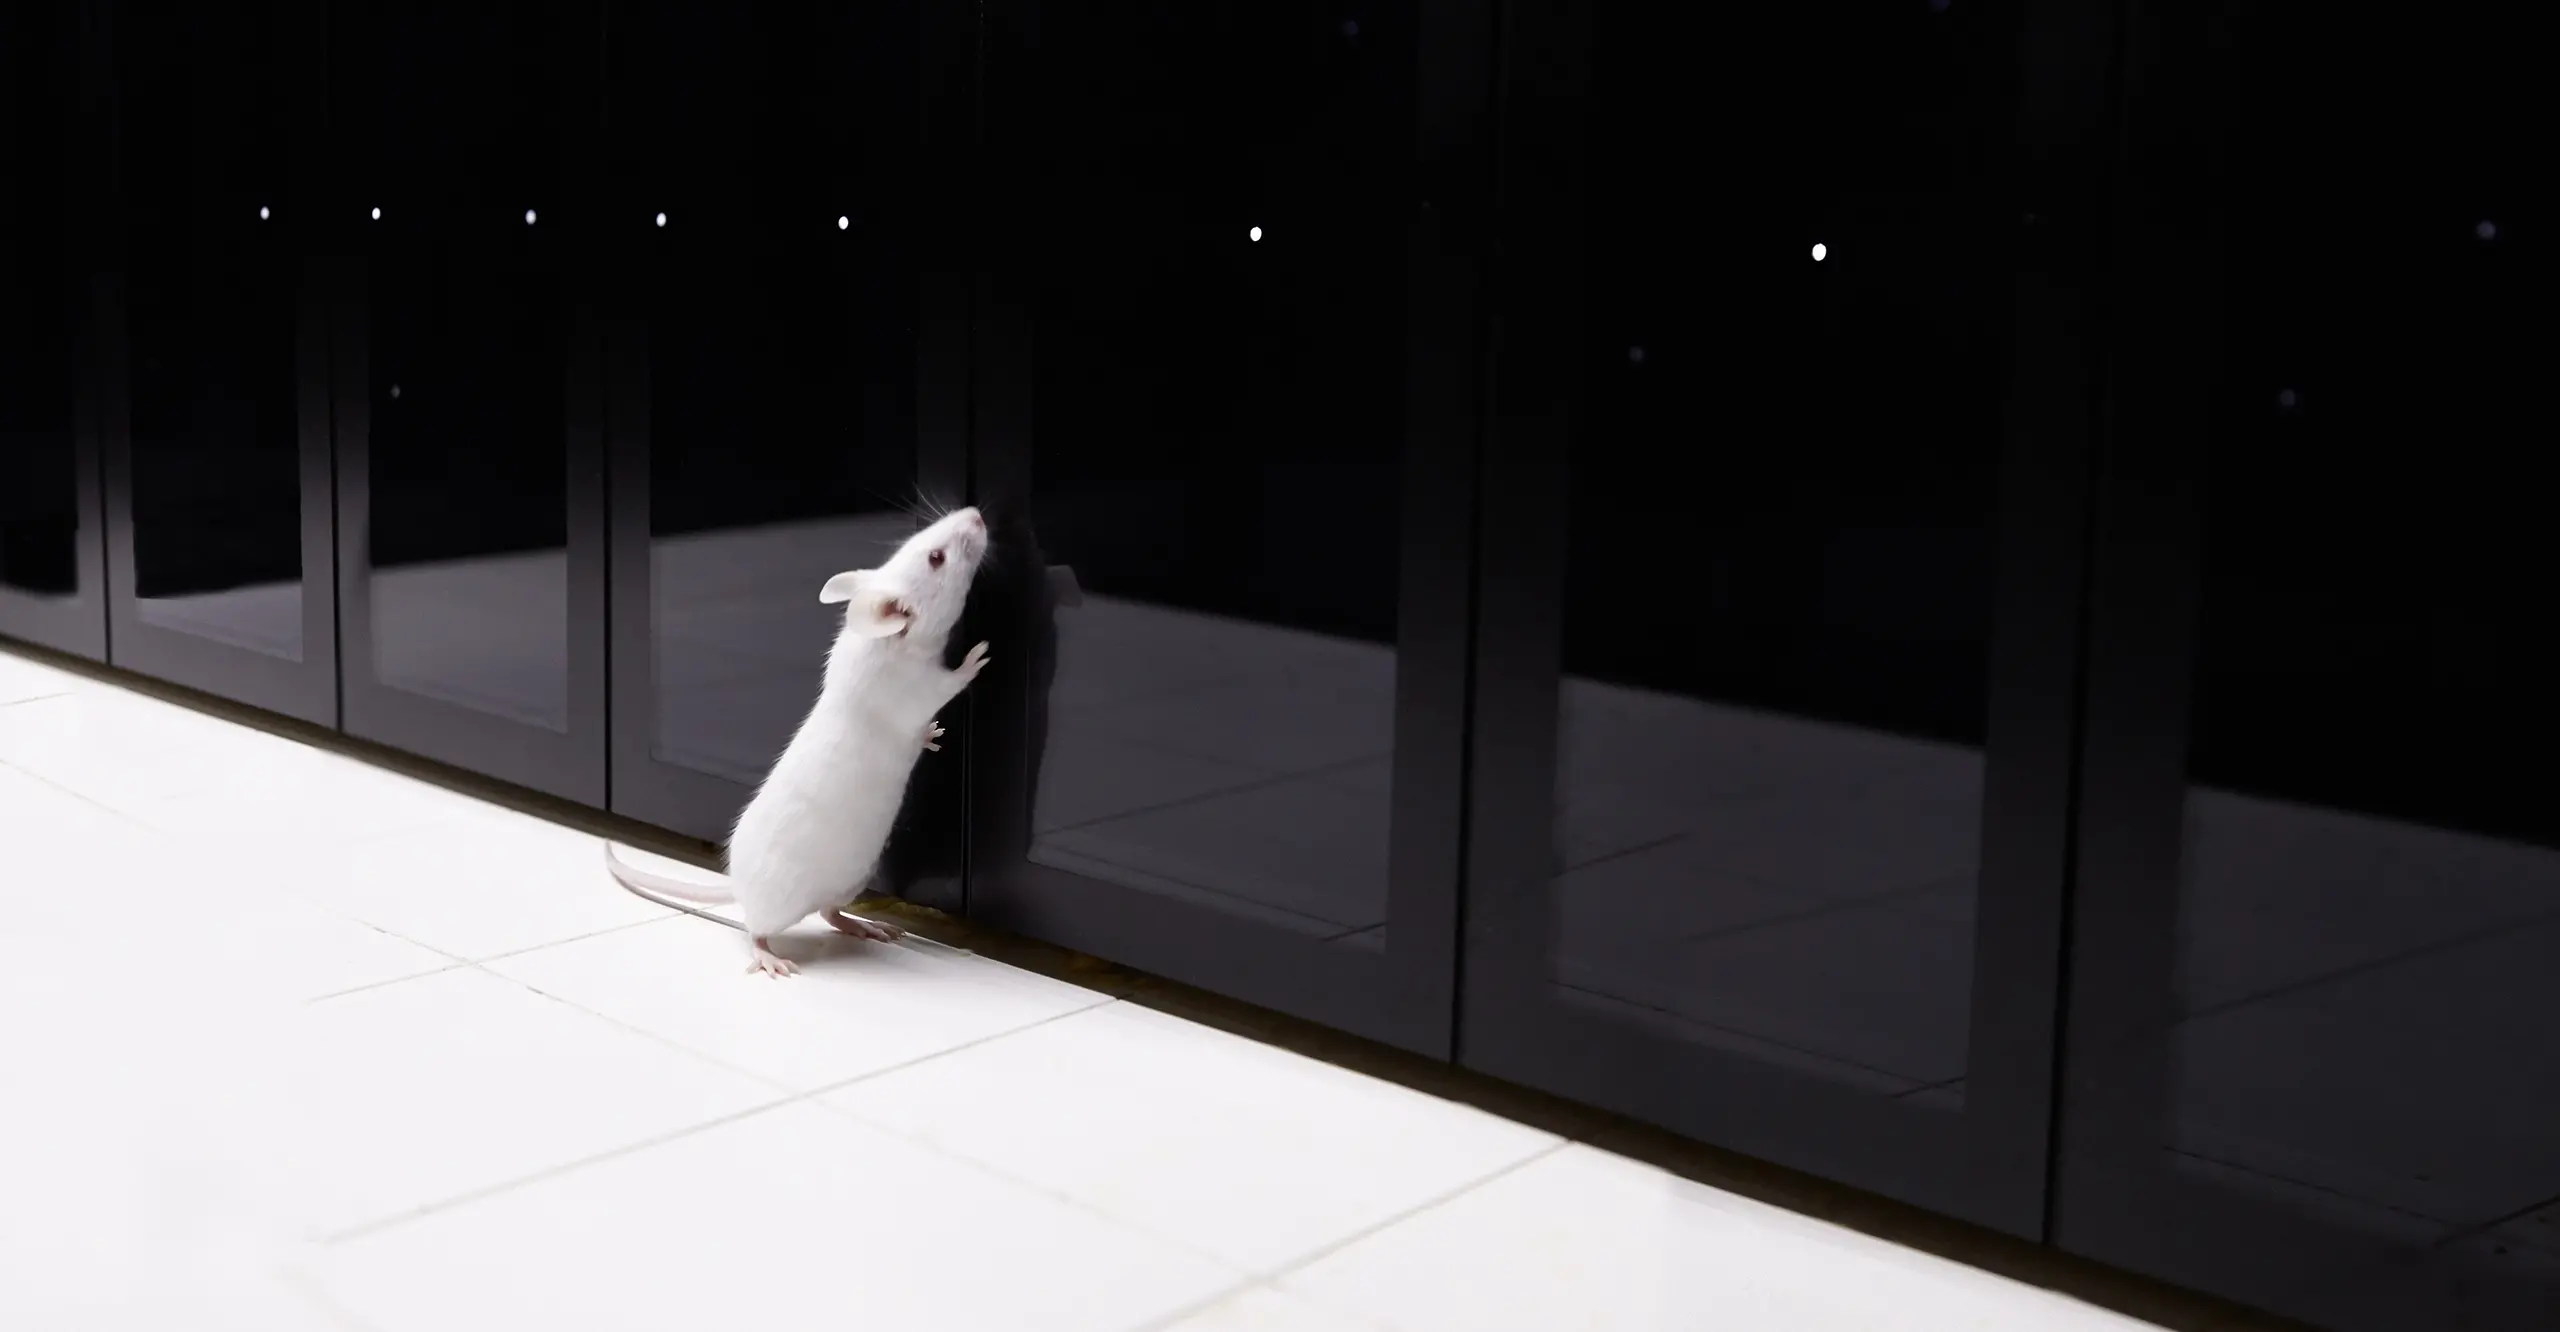 A white mouse 